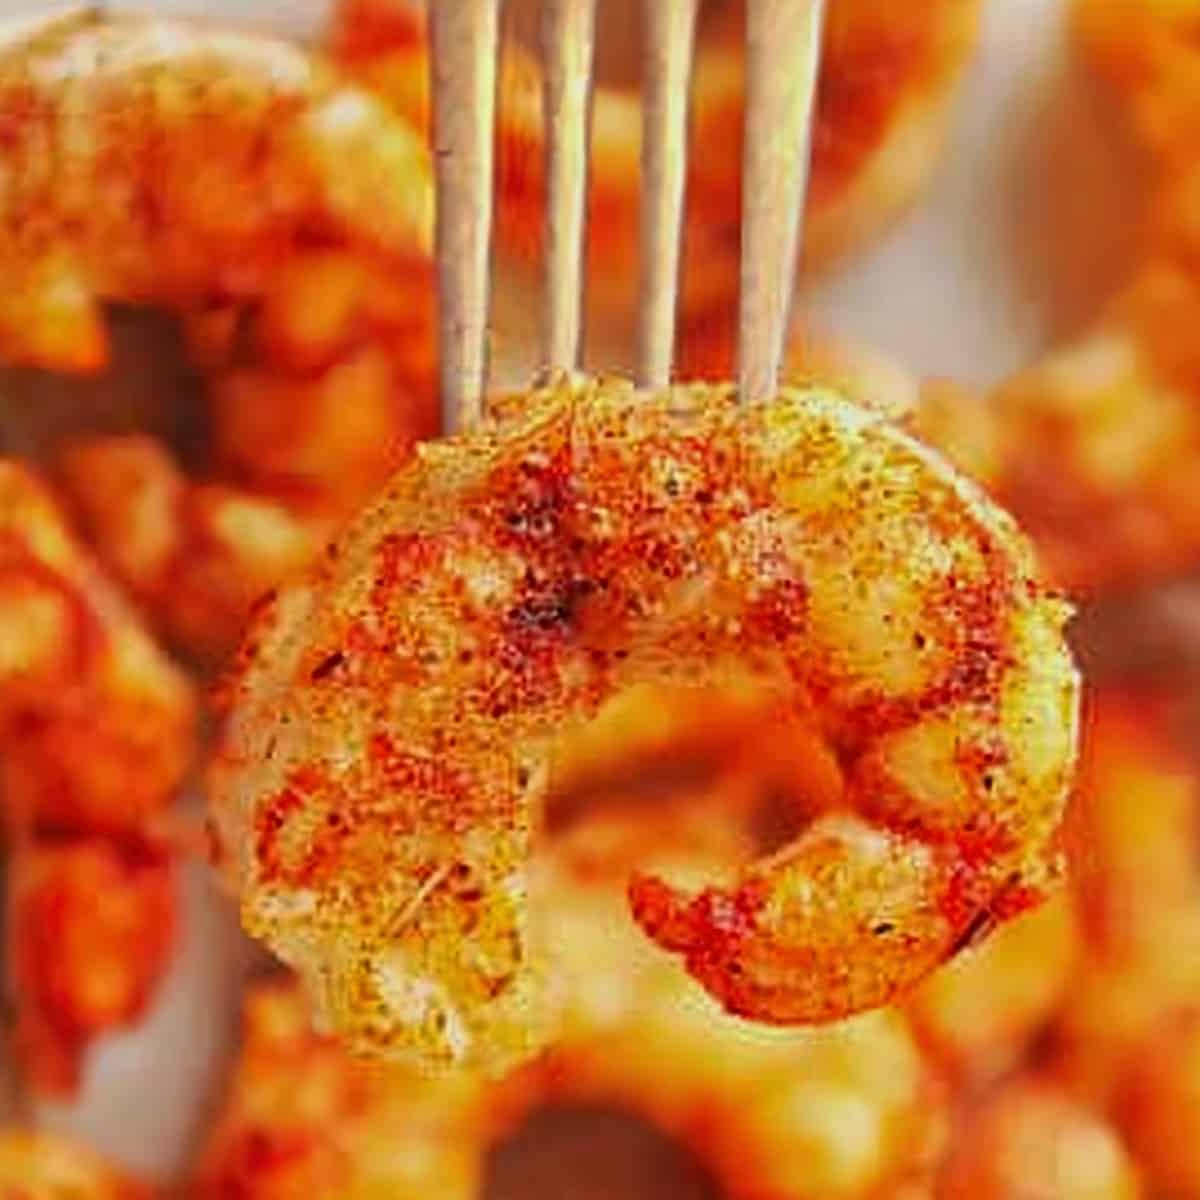 3. Argentine Red Shrimp In The Air Fryer - Argentine Red Shrimp Recipes